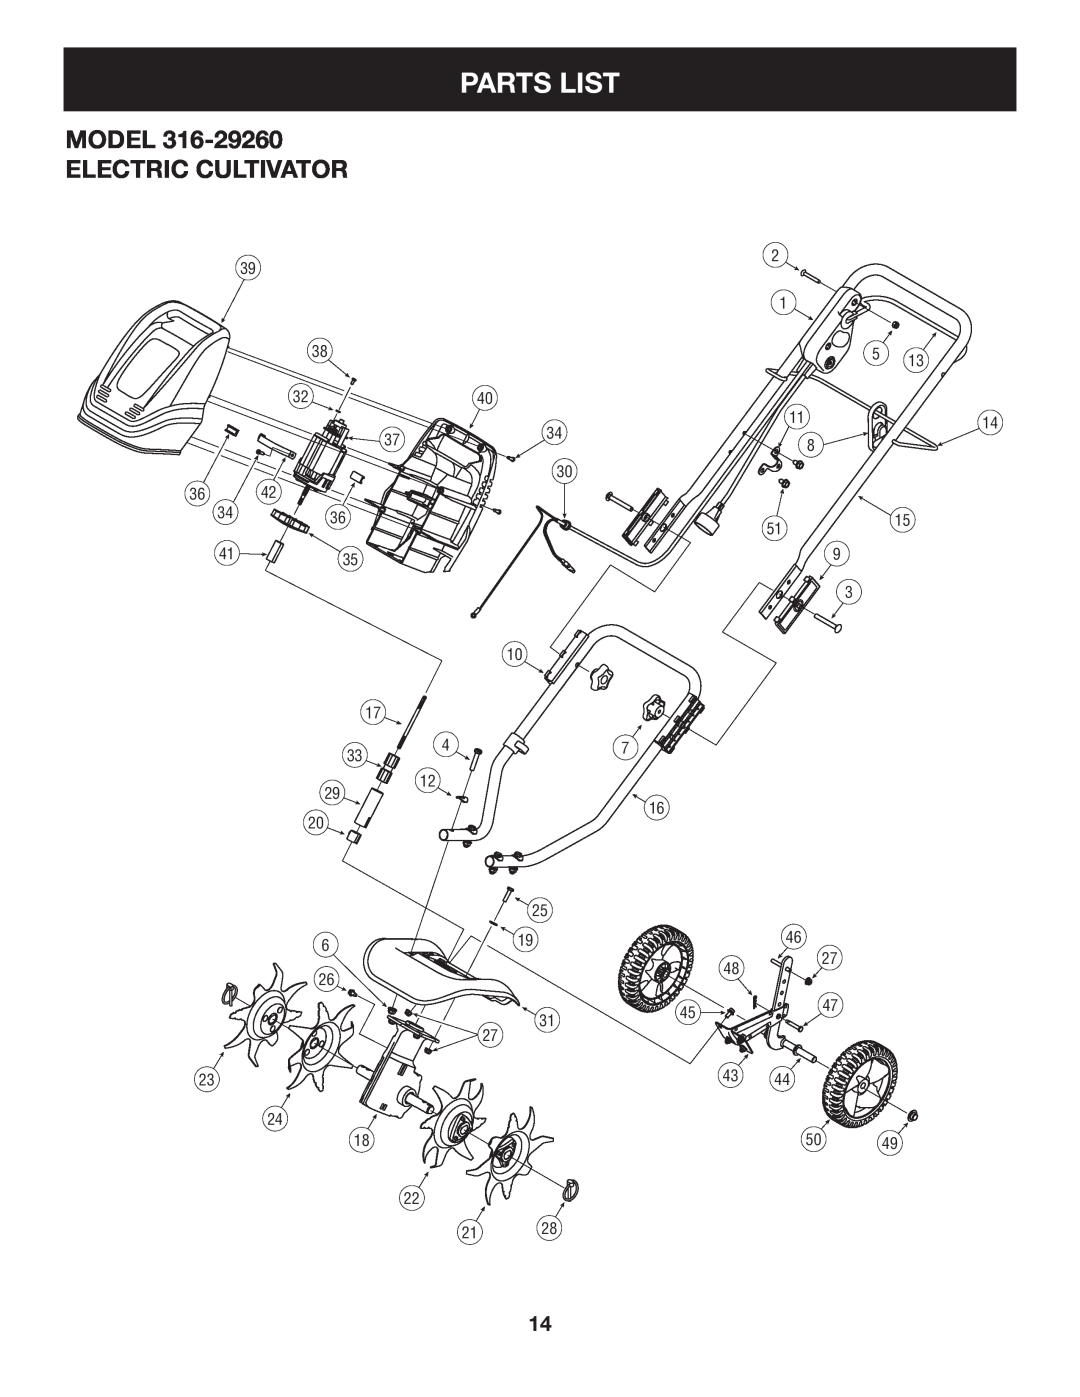 Craftsman 316.2926 manual Parts List, Model Electric Cultivator 